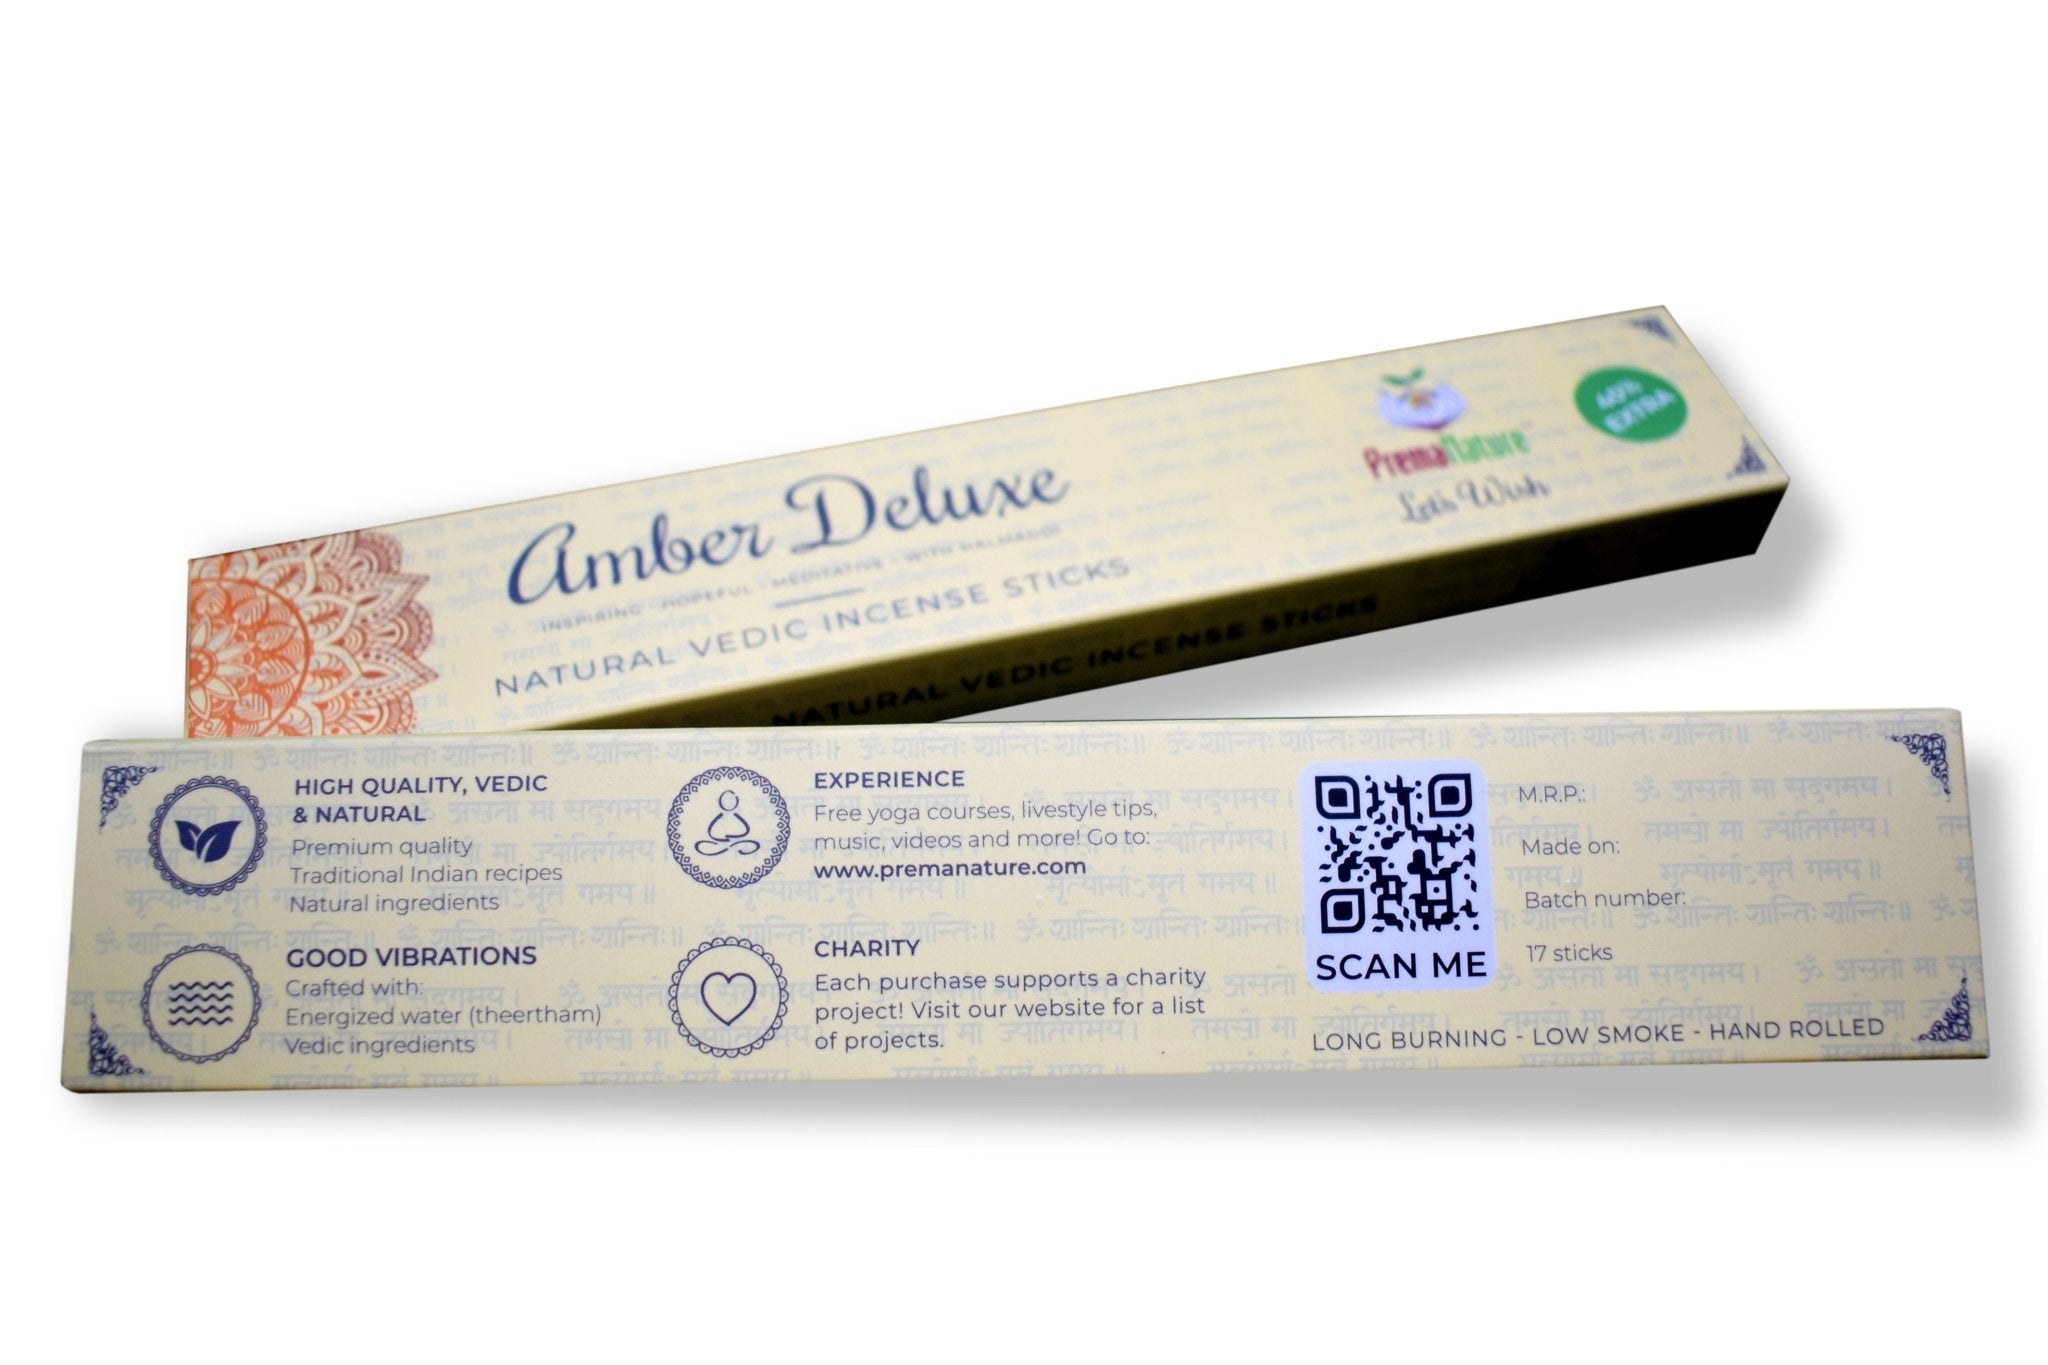 Amber deluxe - Incense sticks by Prema Nature - scentingsecrets